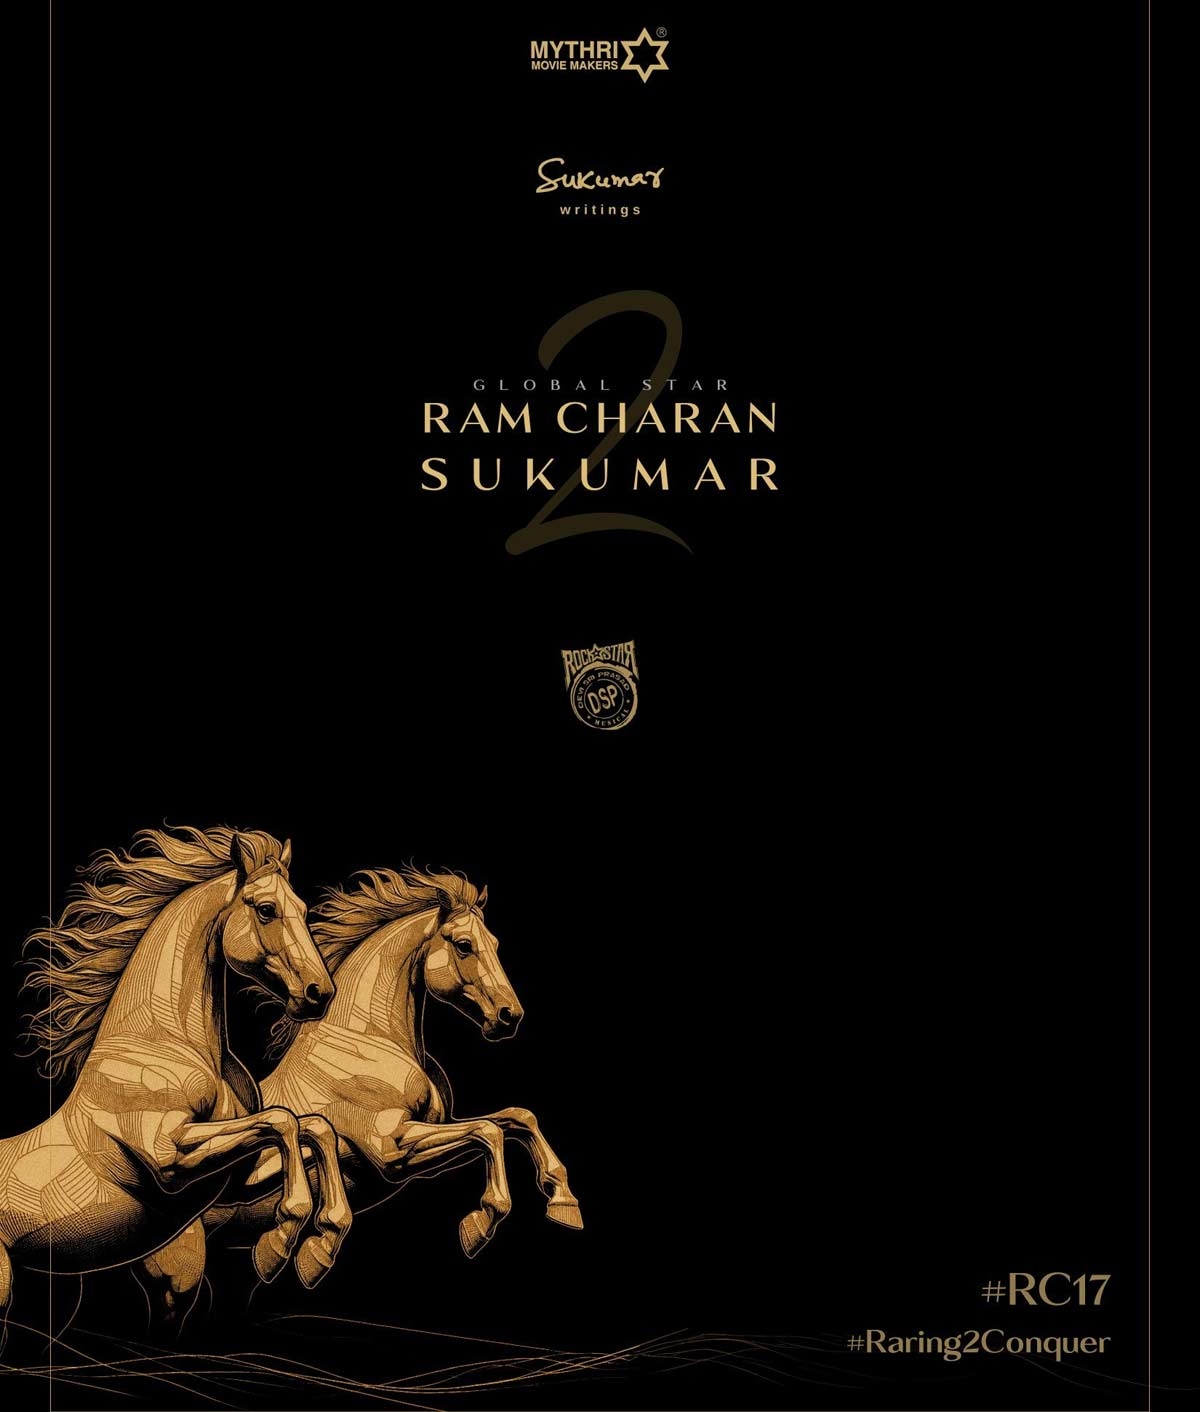 Global Star Ram Charans next with Sukumar announced as RC17